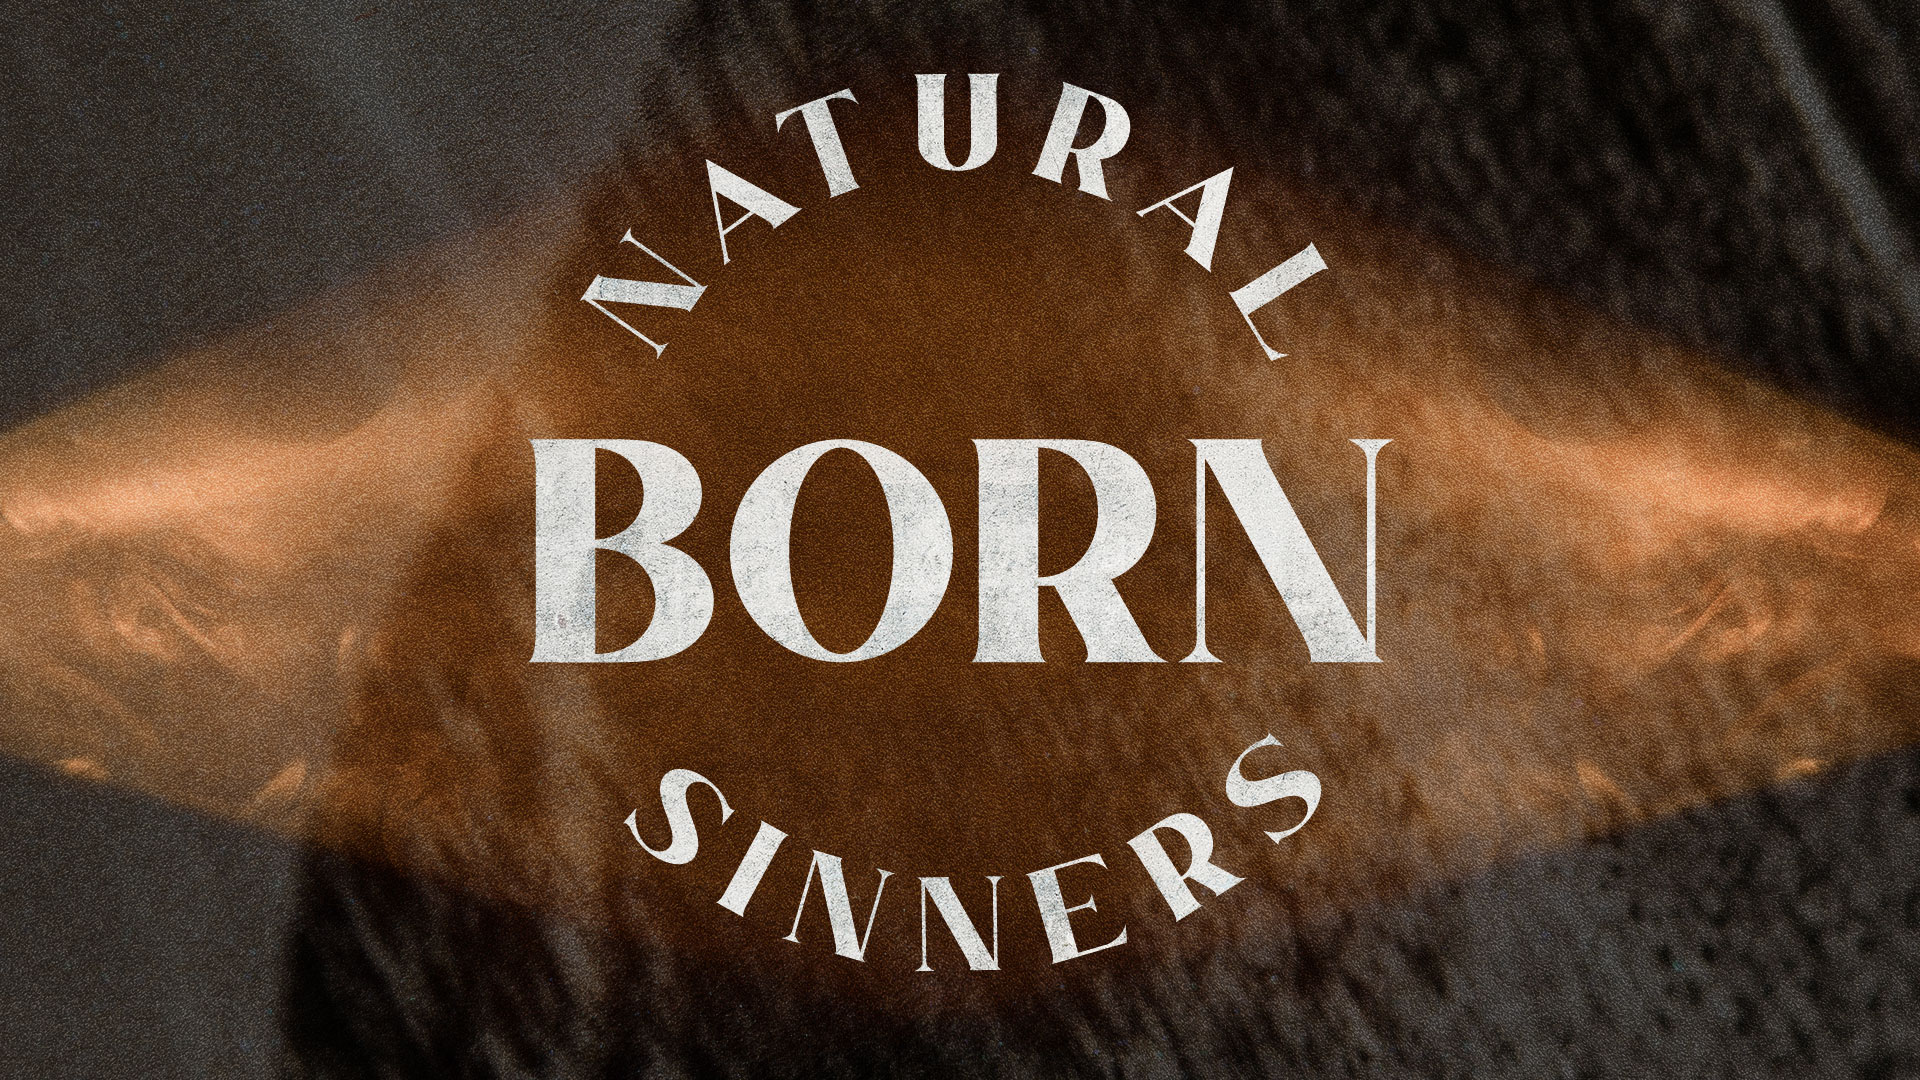 Natural Born Sinners